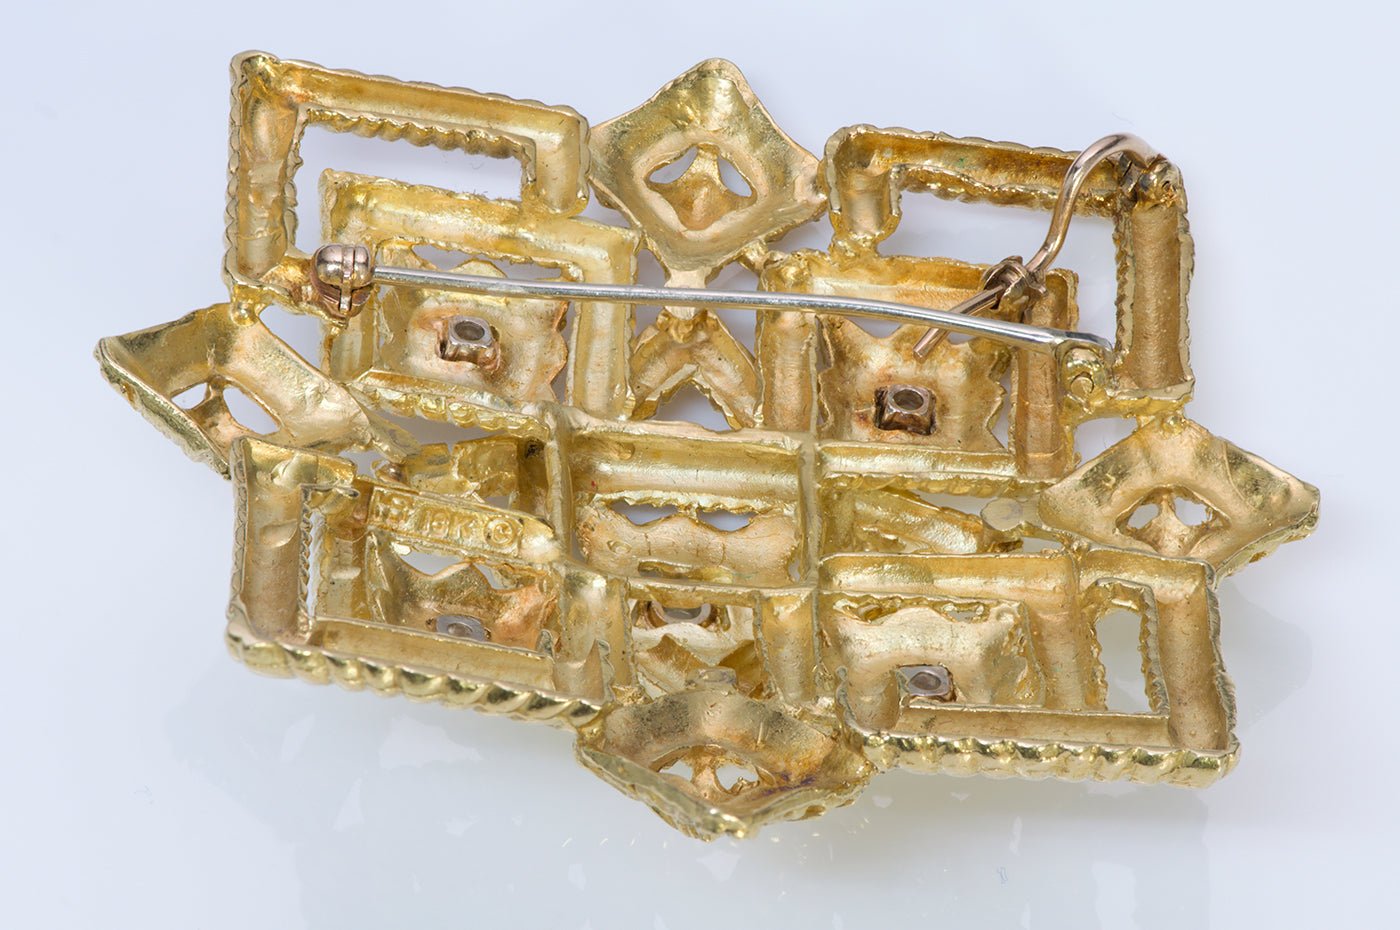 Hammerman Brothers 18K Gold Diamond Pendant Brooch